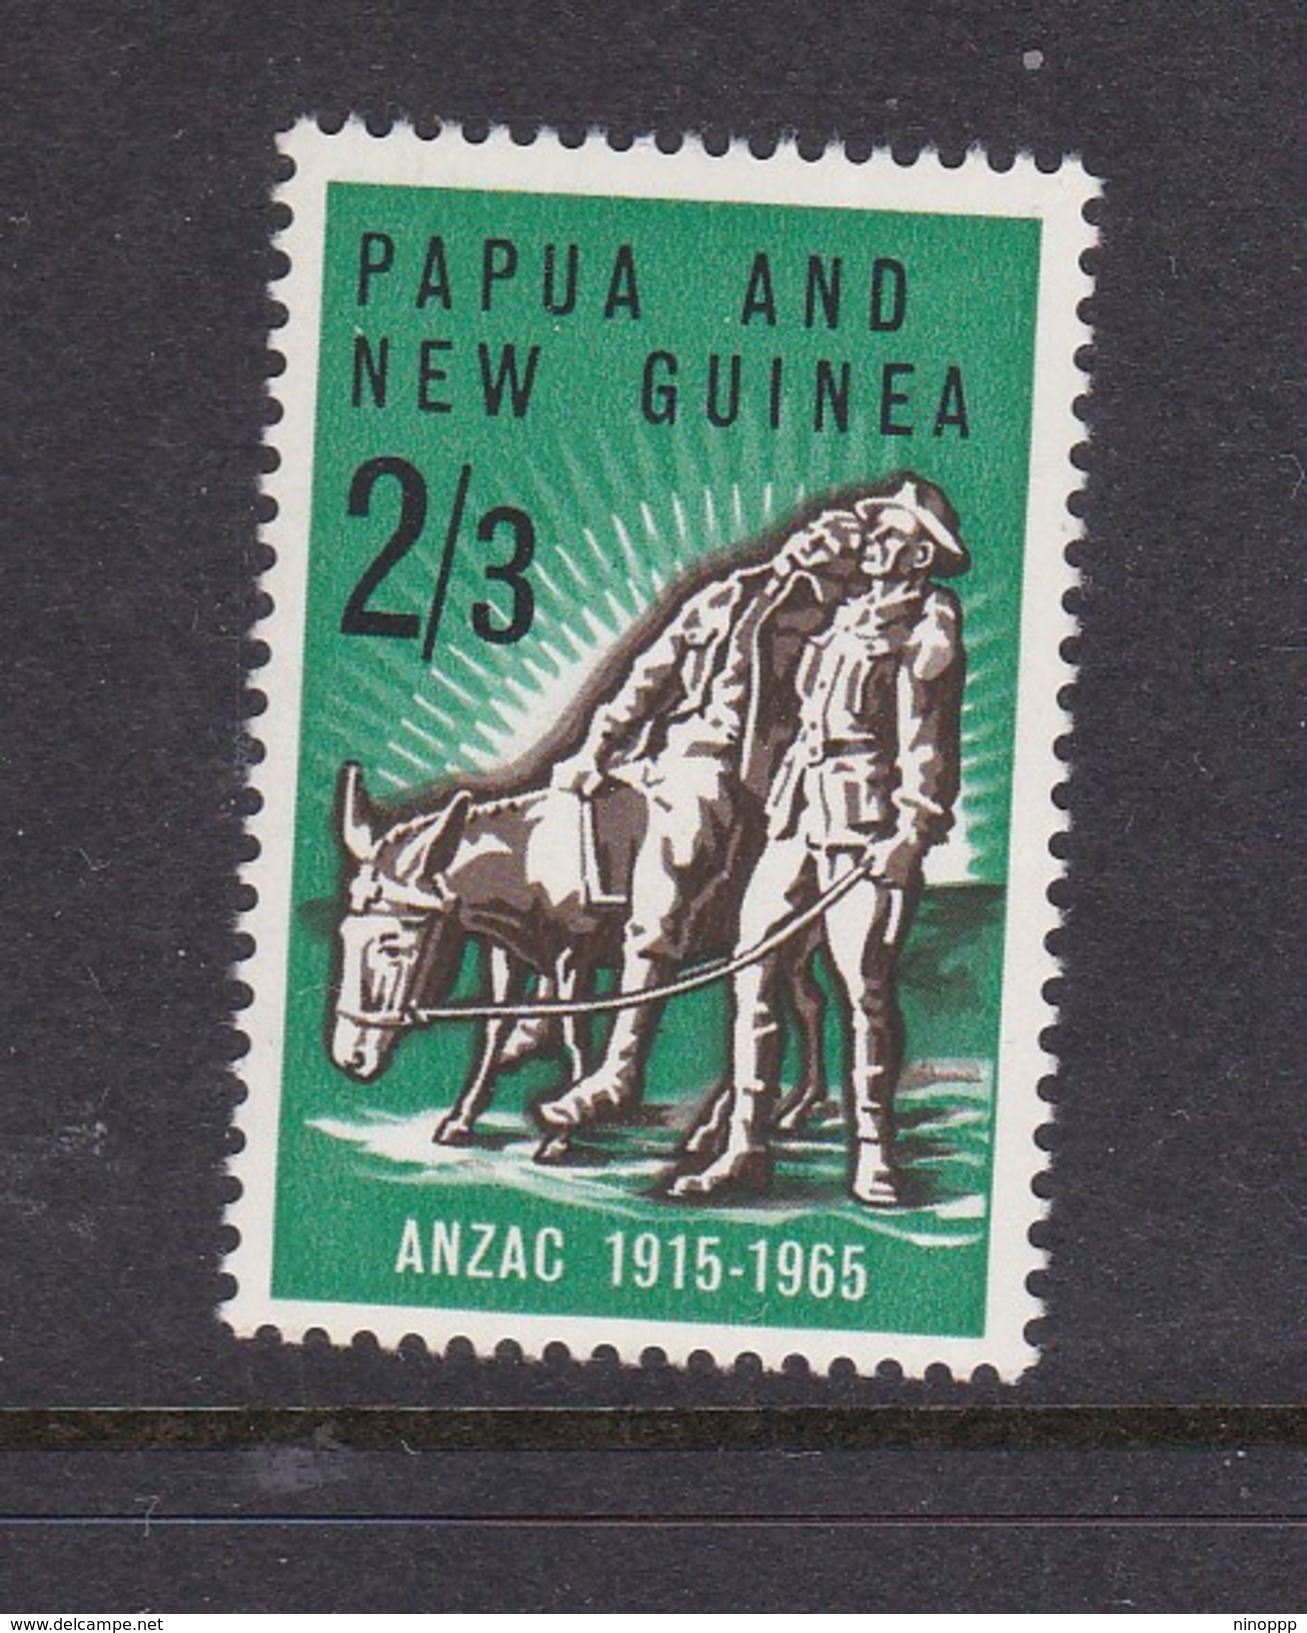 Papua New Guinea SG 76 1965 50th Anniversary Of Gallipoli Landing Mint Never Hinged - Papua New Guinea